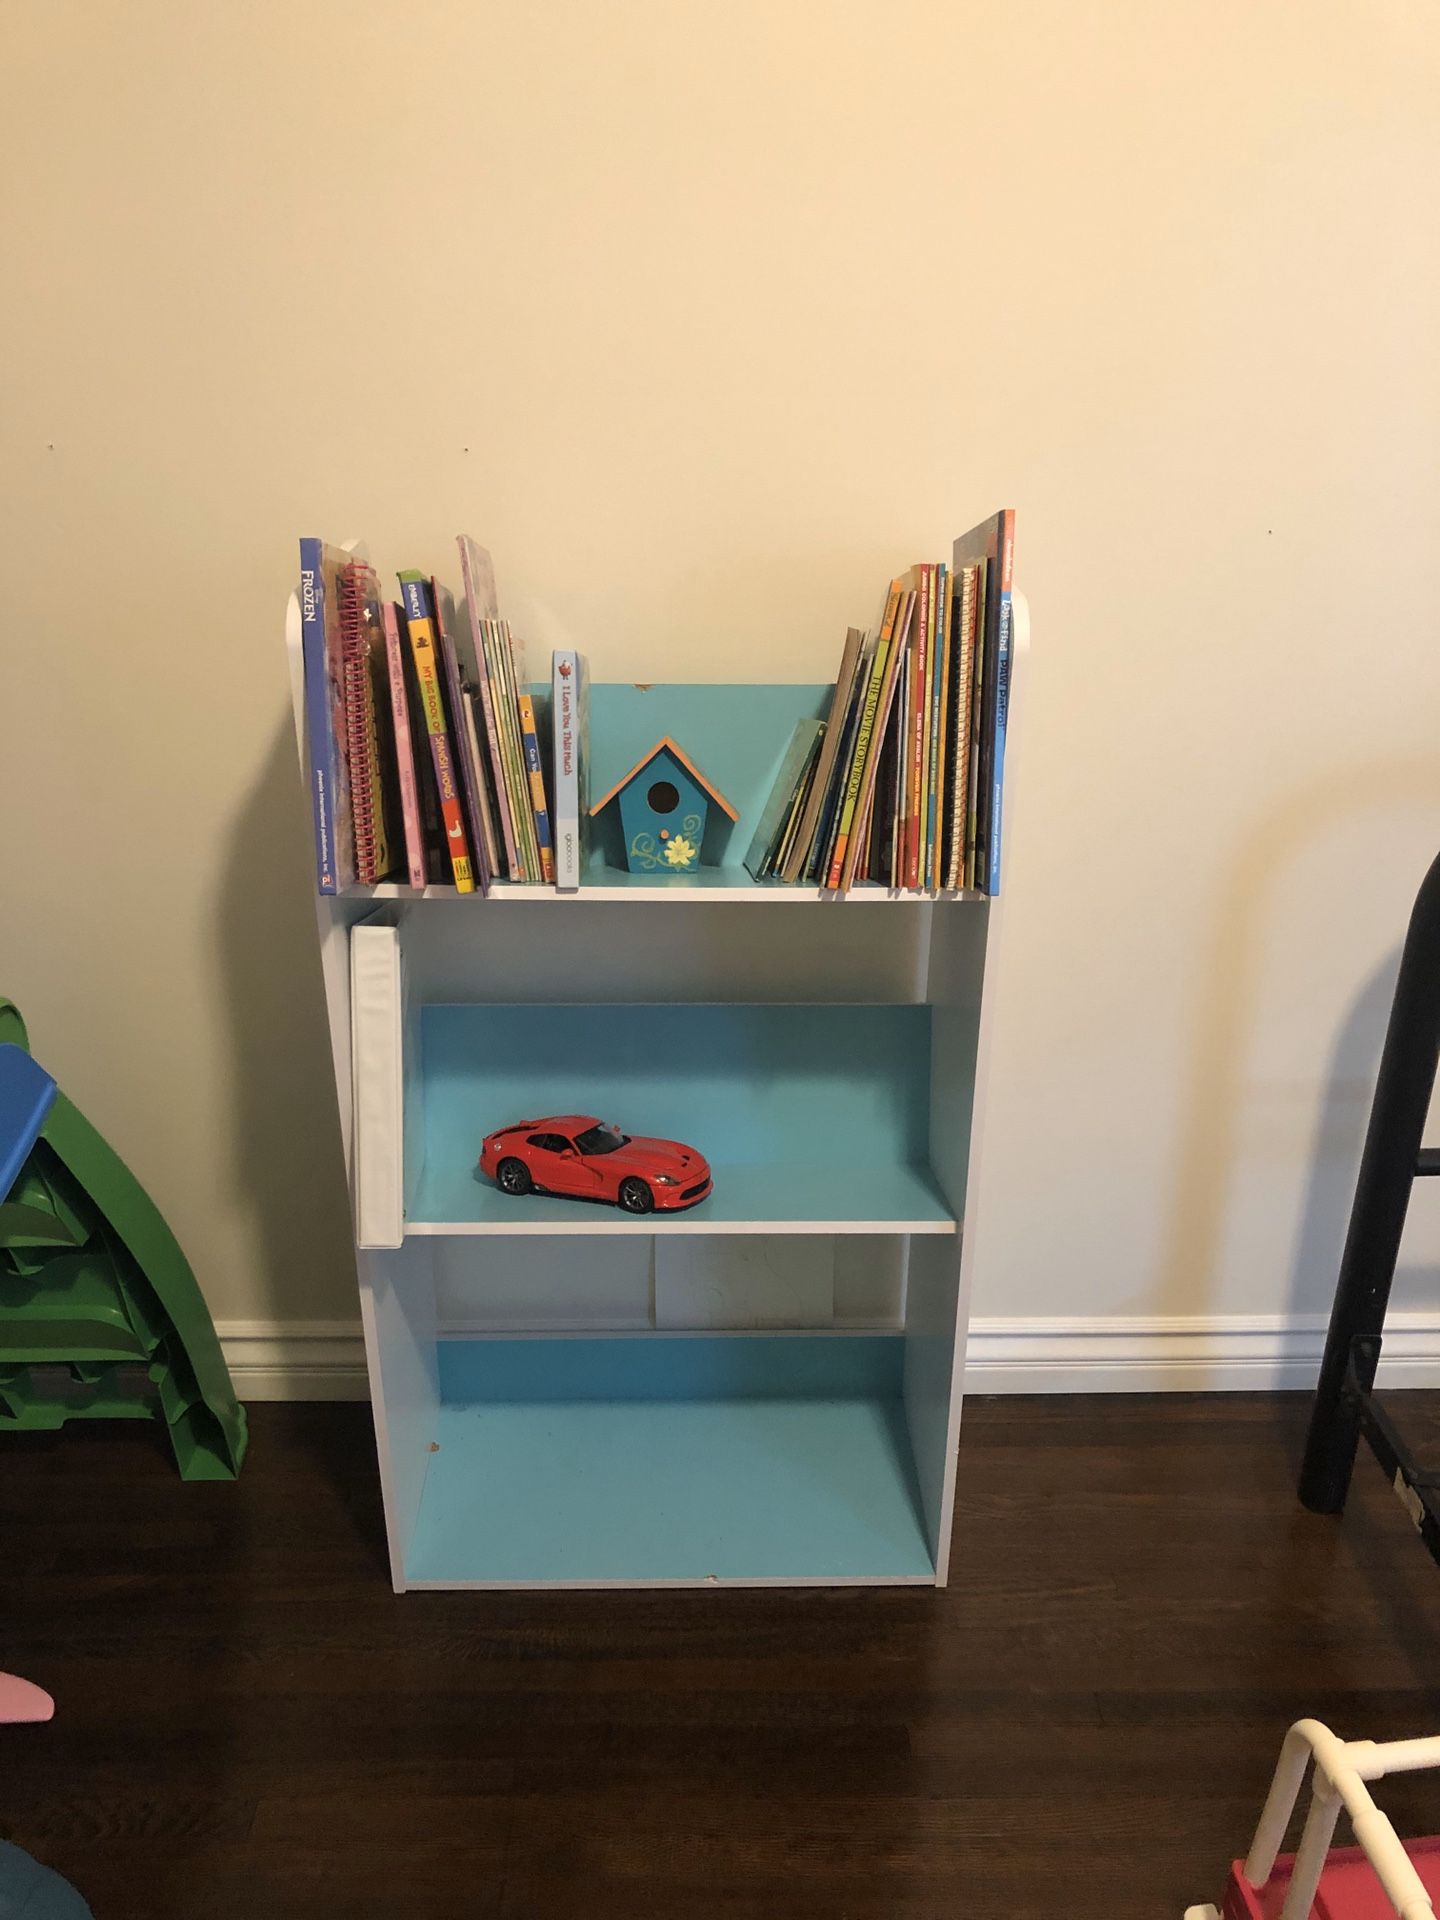 Kids book shelf or storage shelf’s